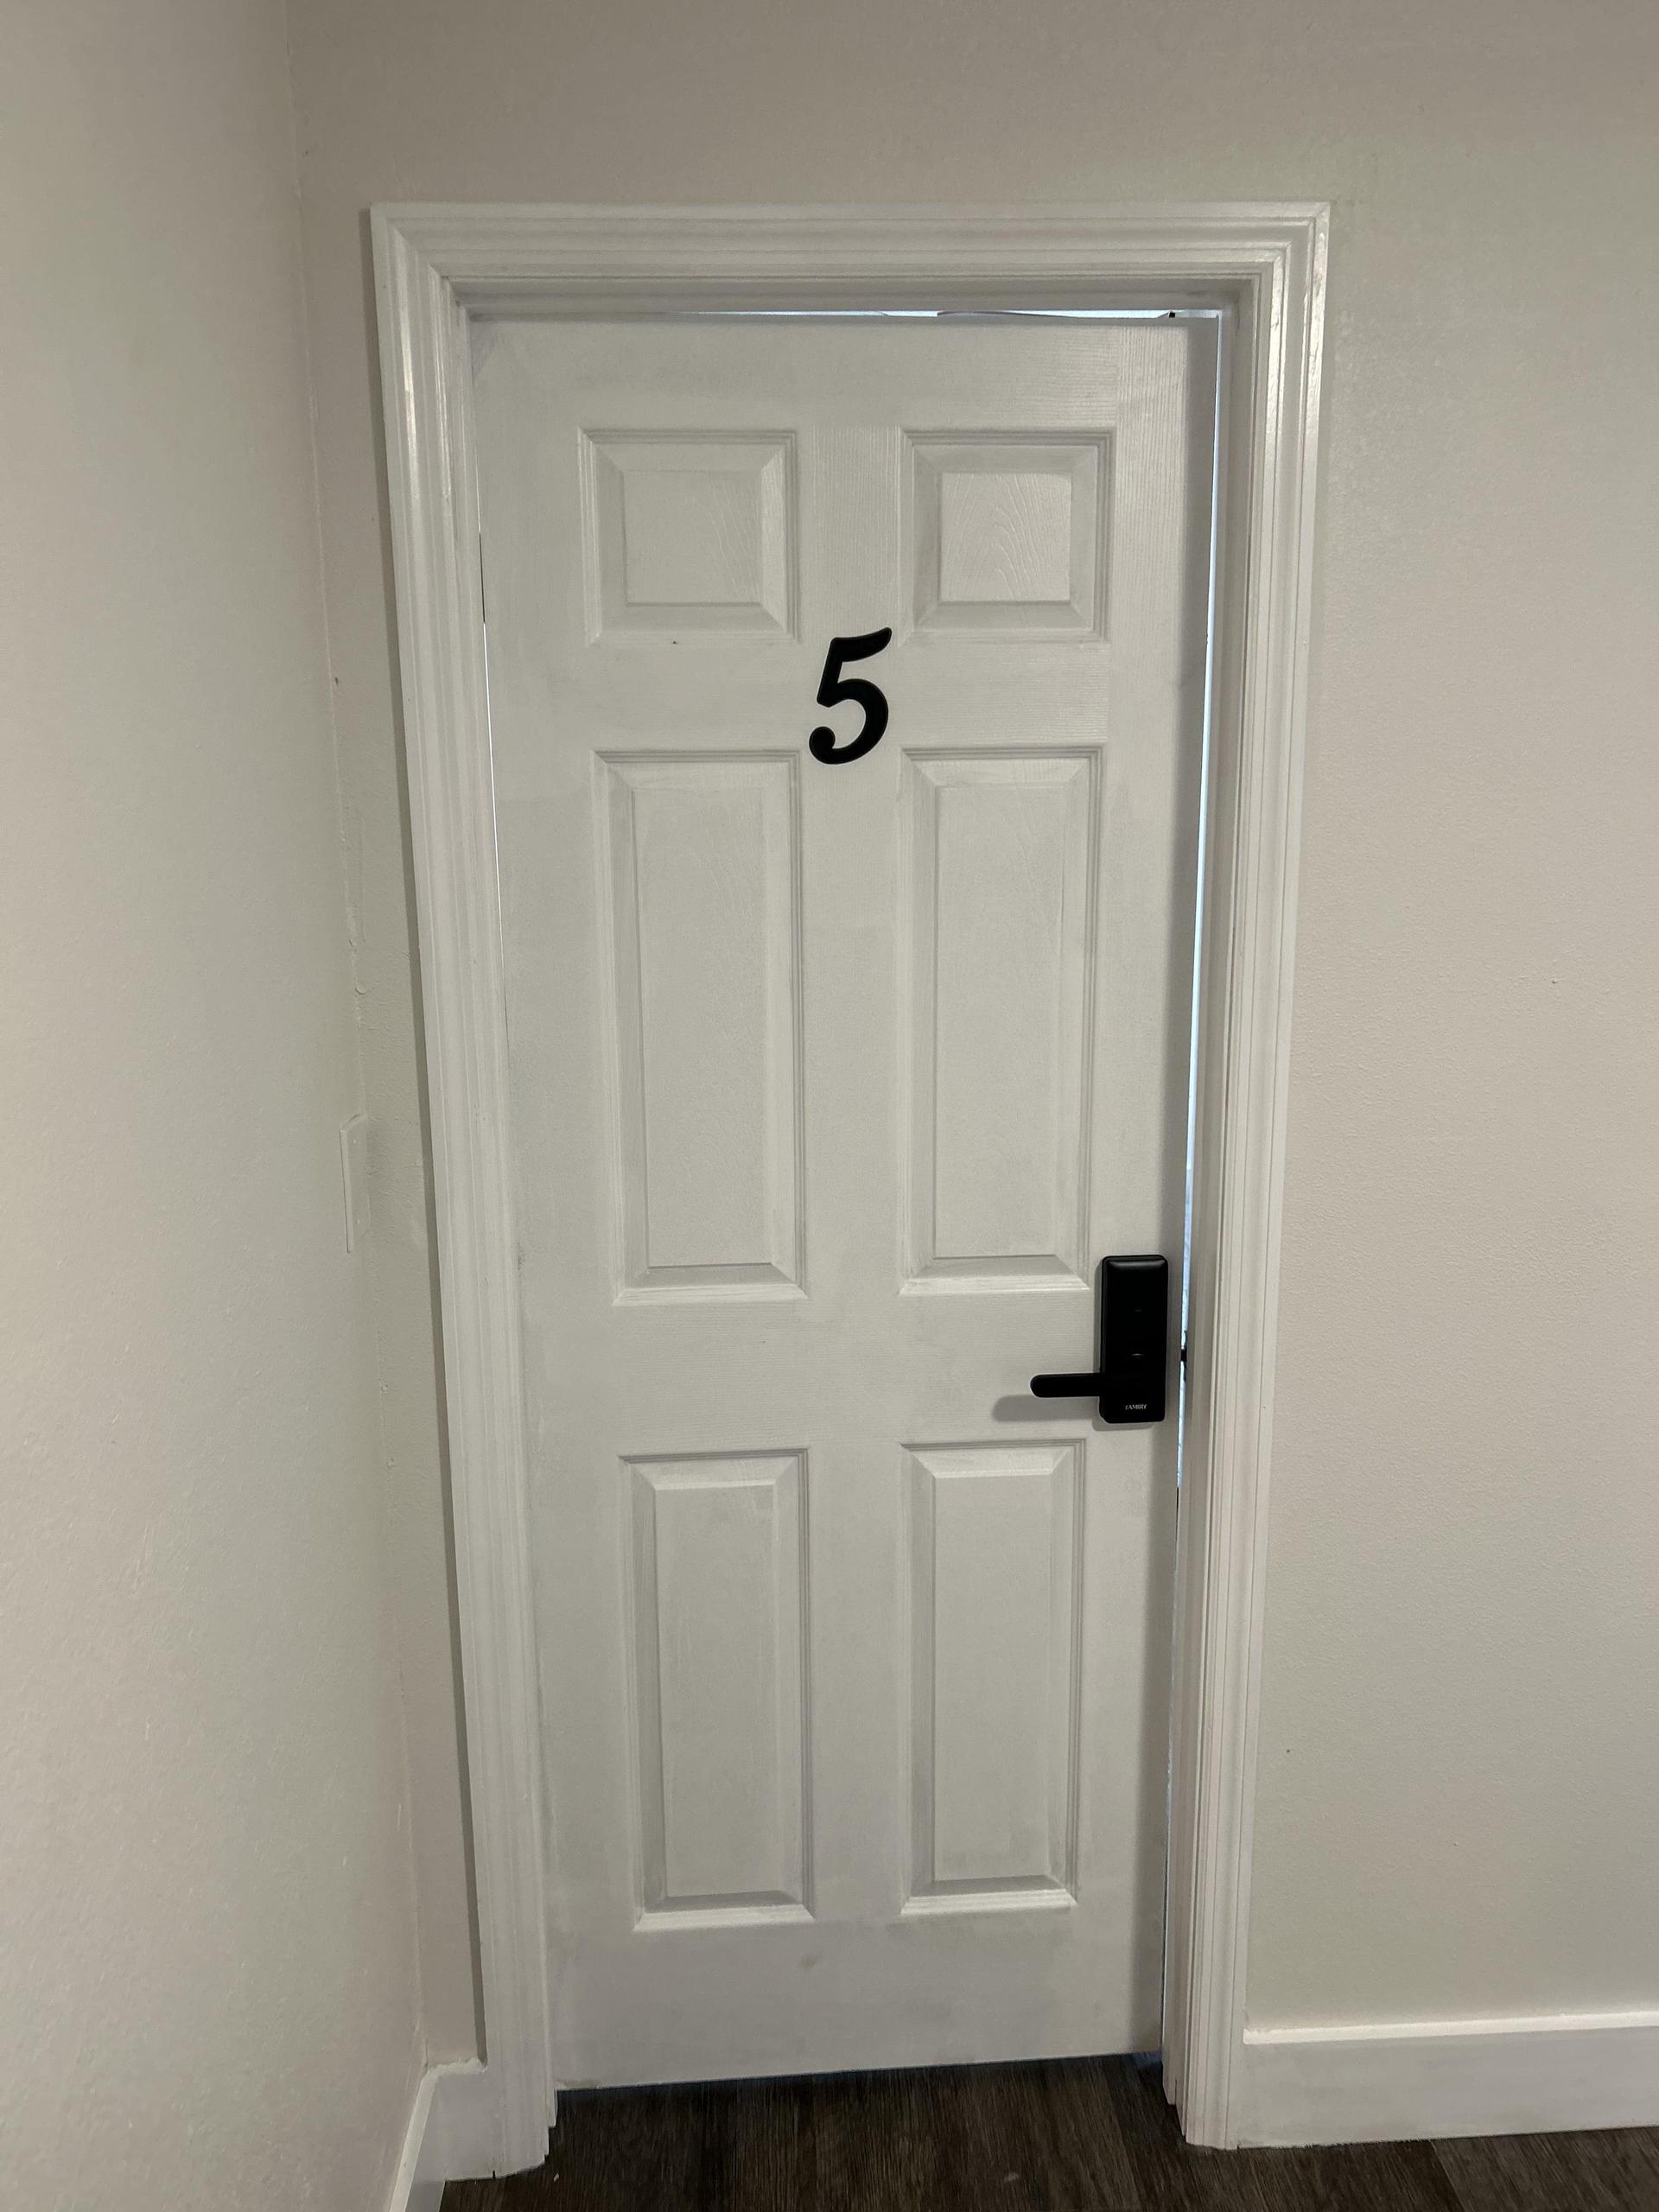 Room 5 awaits!